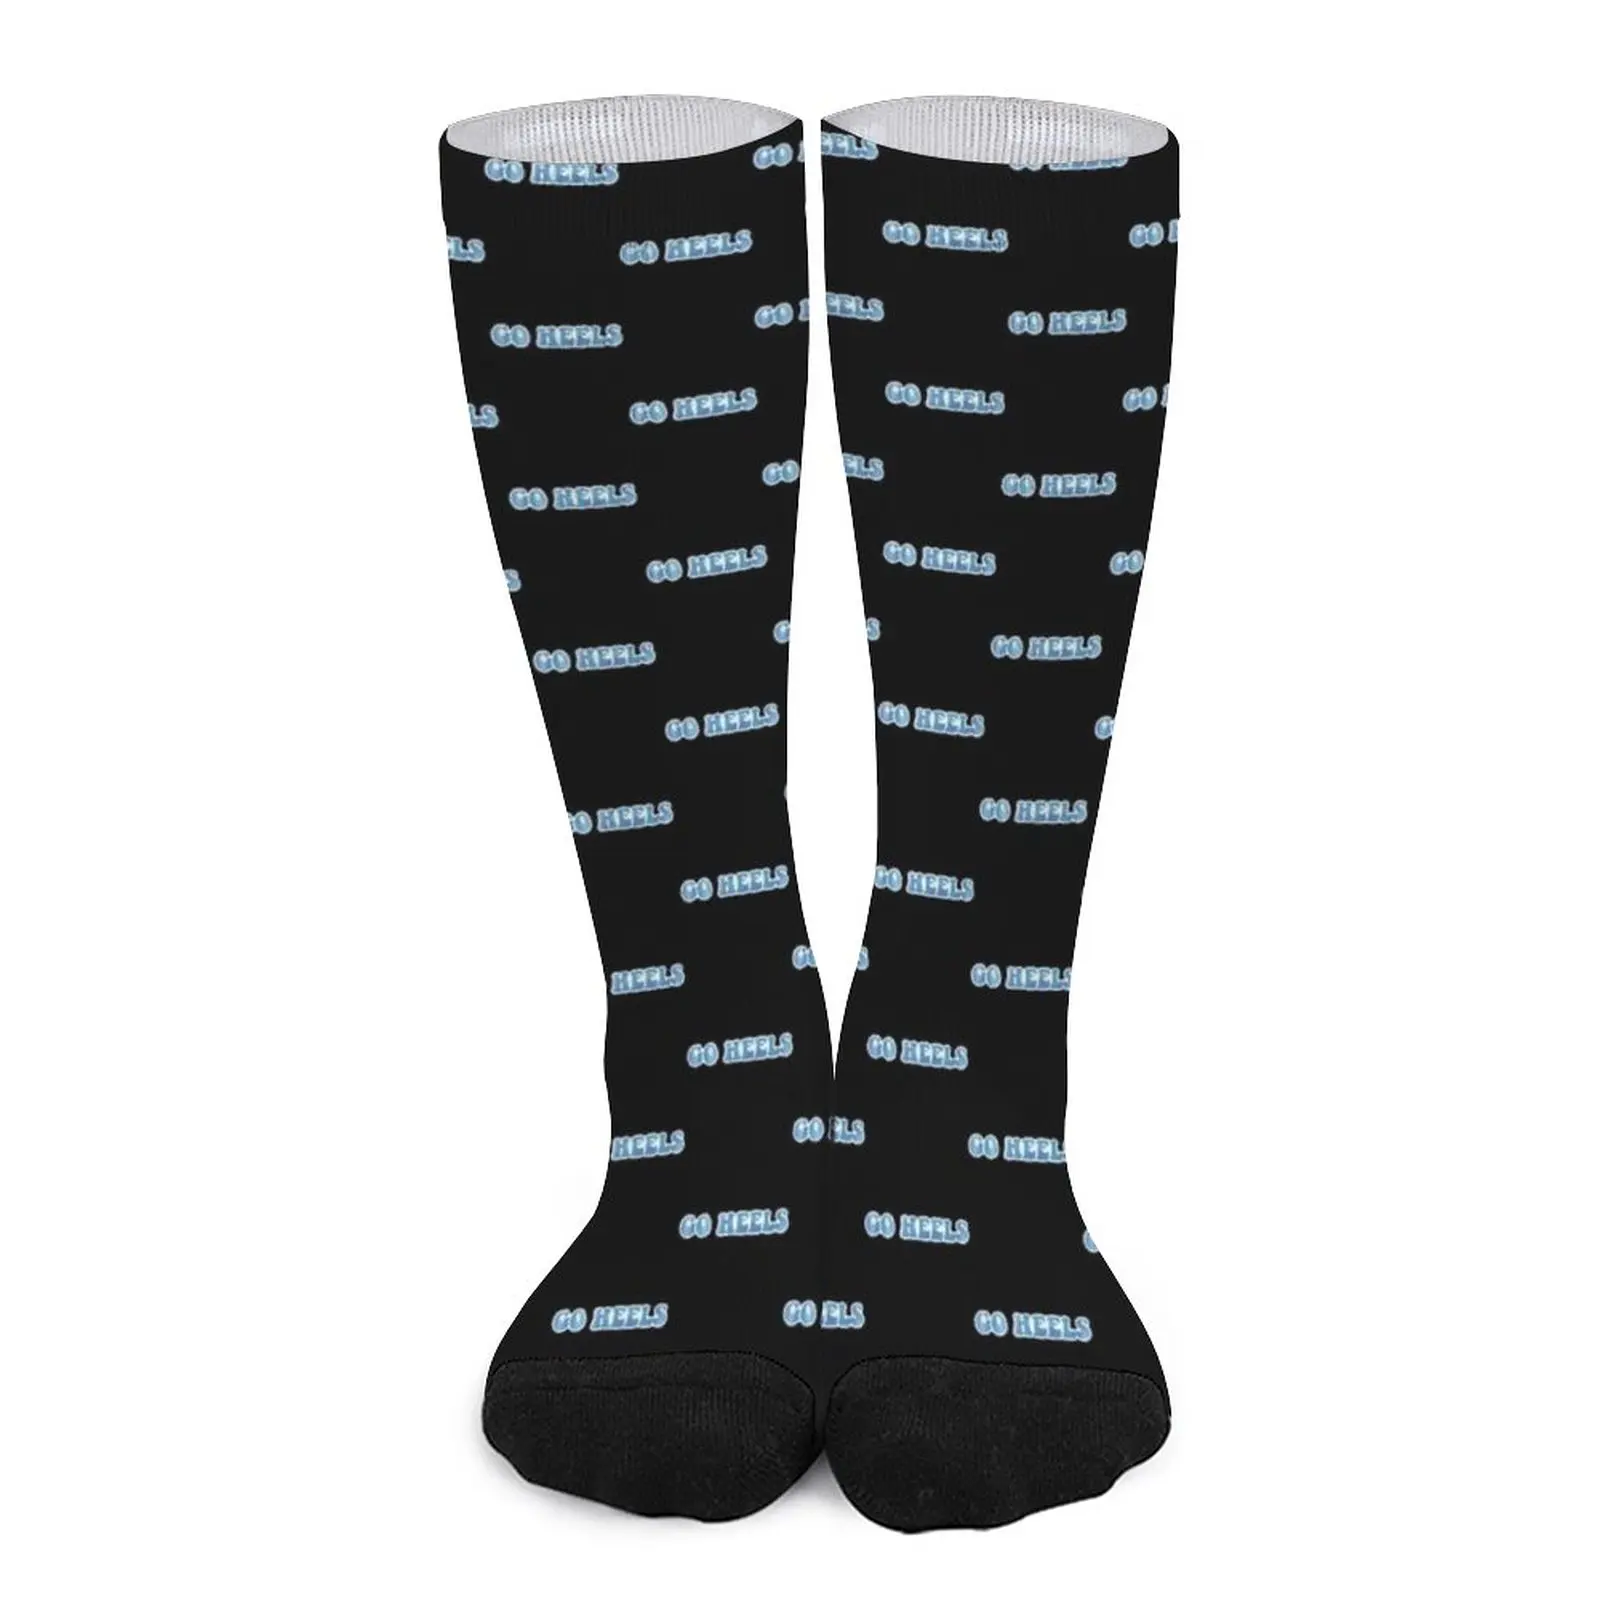 Go Heels Socks valentines day gift for boyfriend Thermal socks man winter